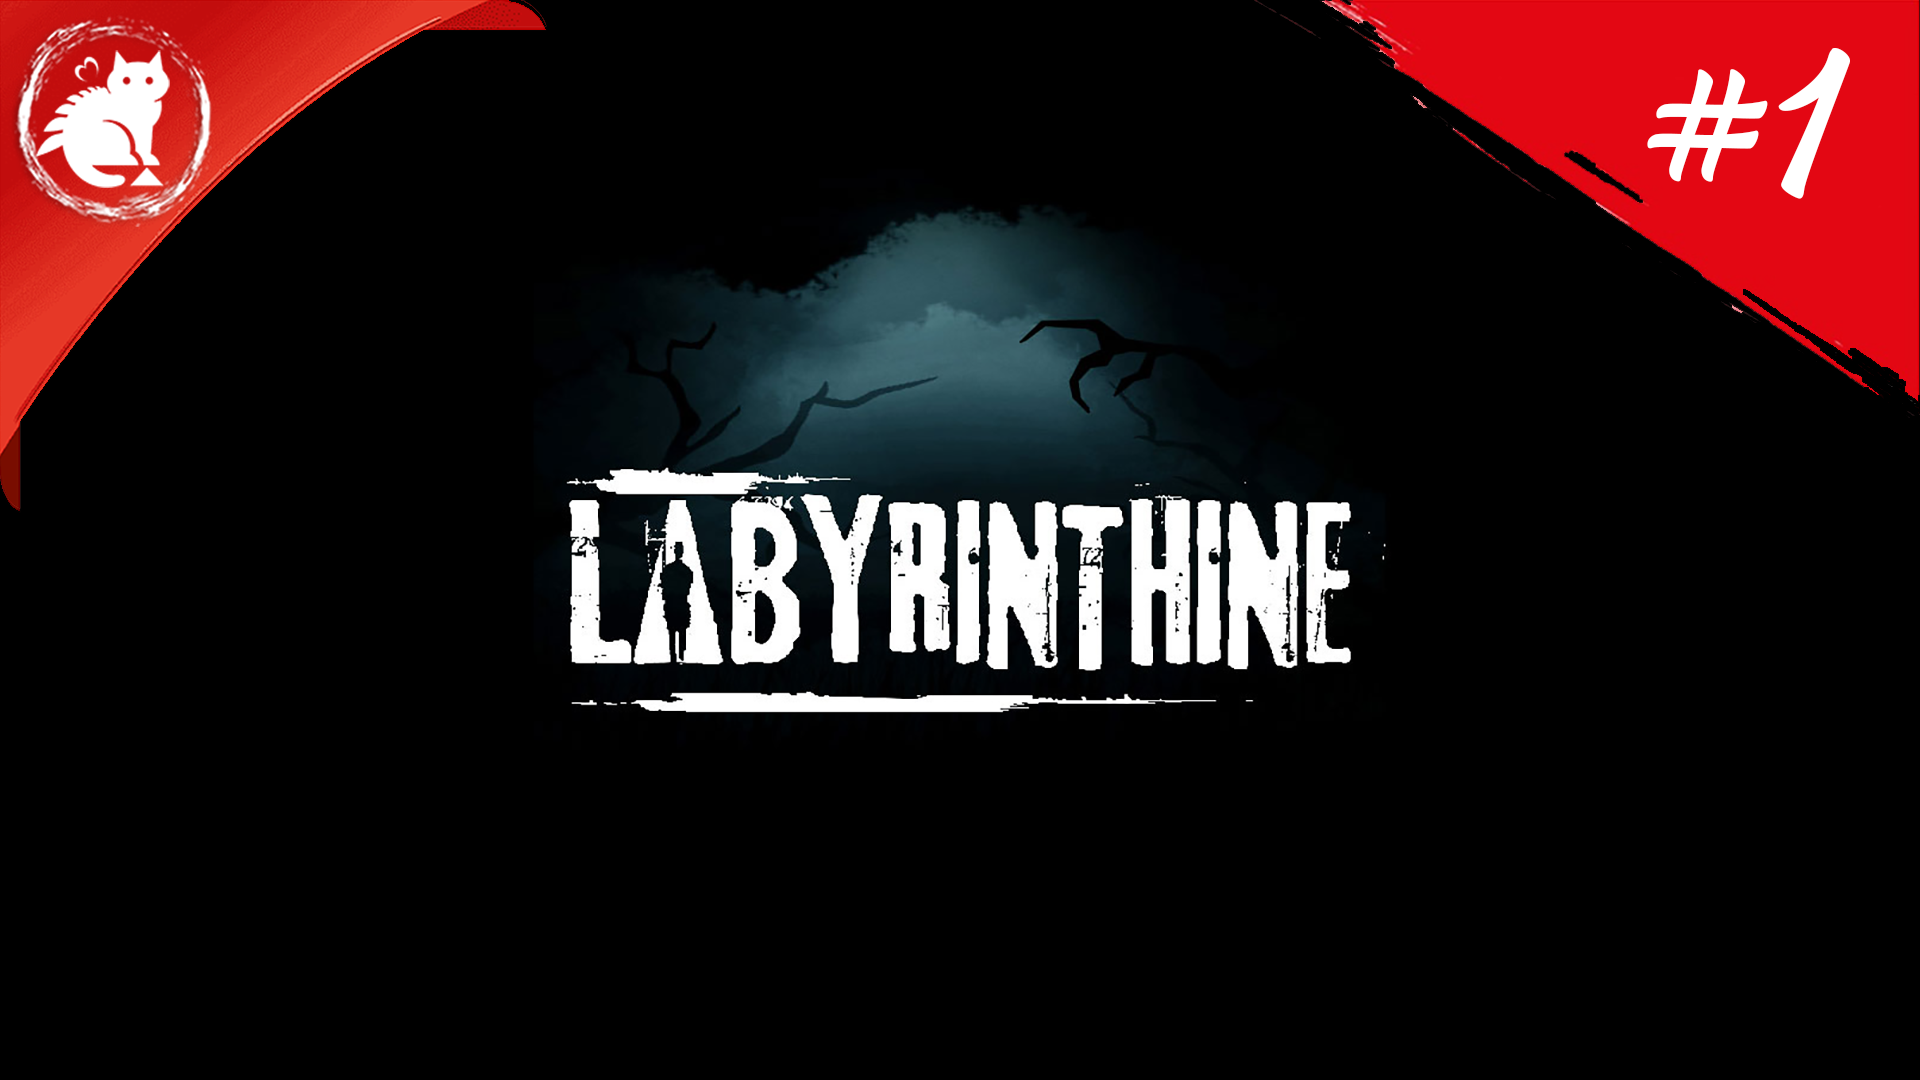 ★ Labyrinthine ★ - Скучный. душный лабиринт